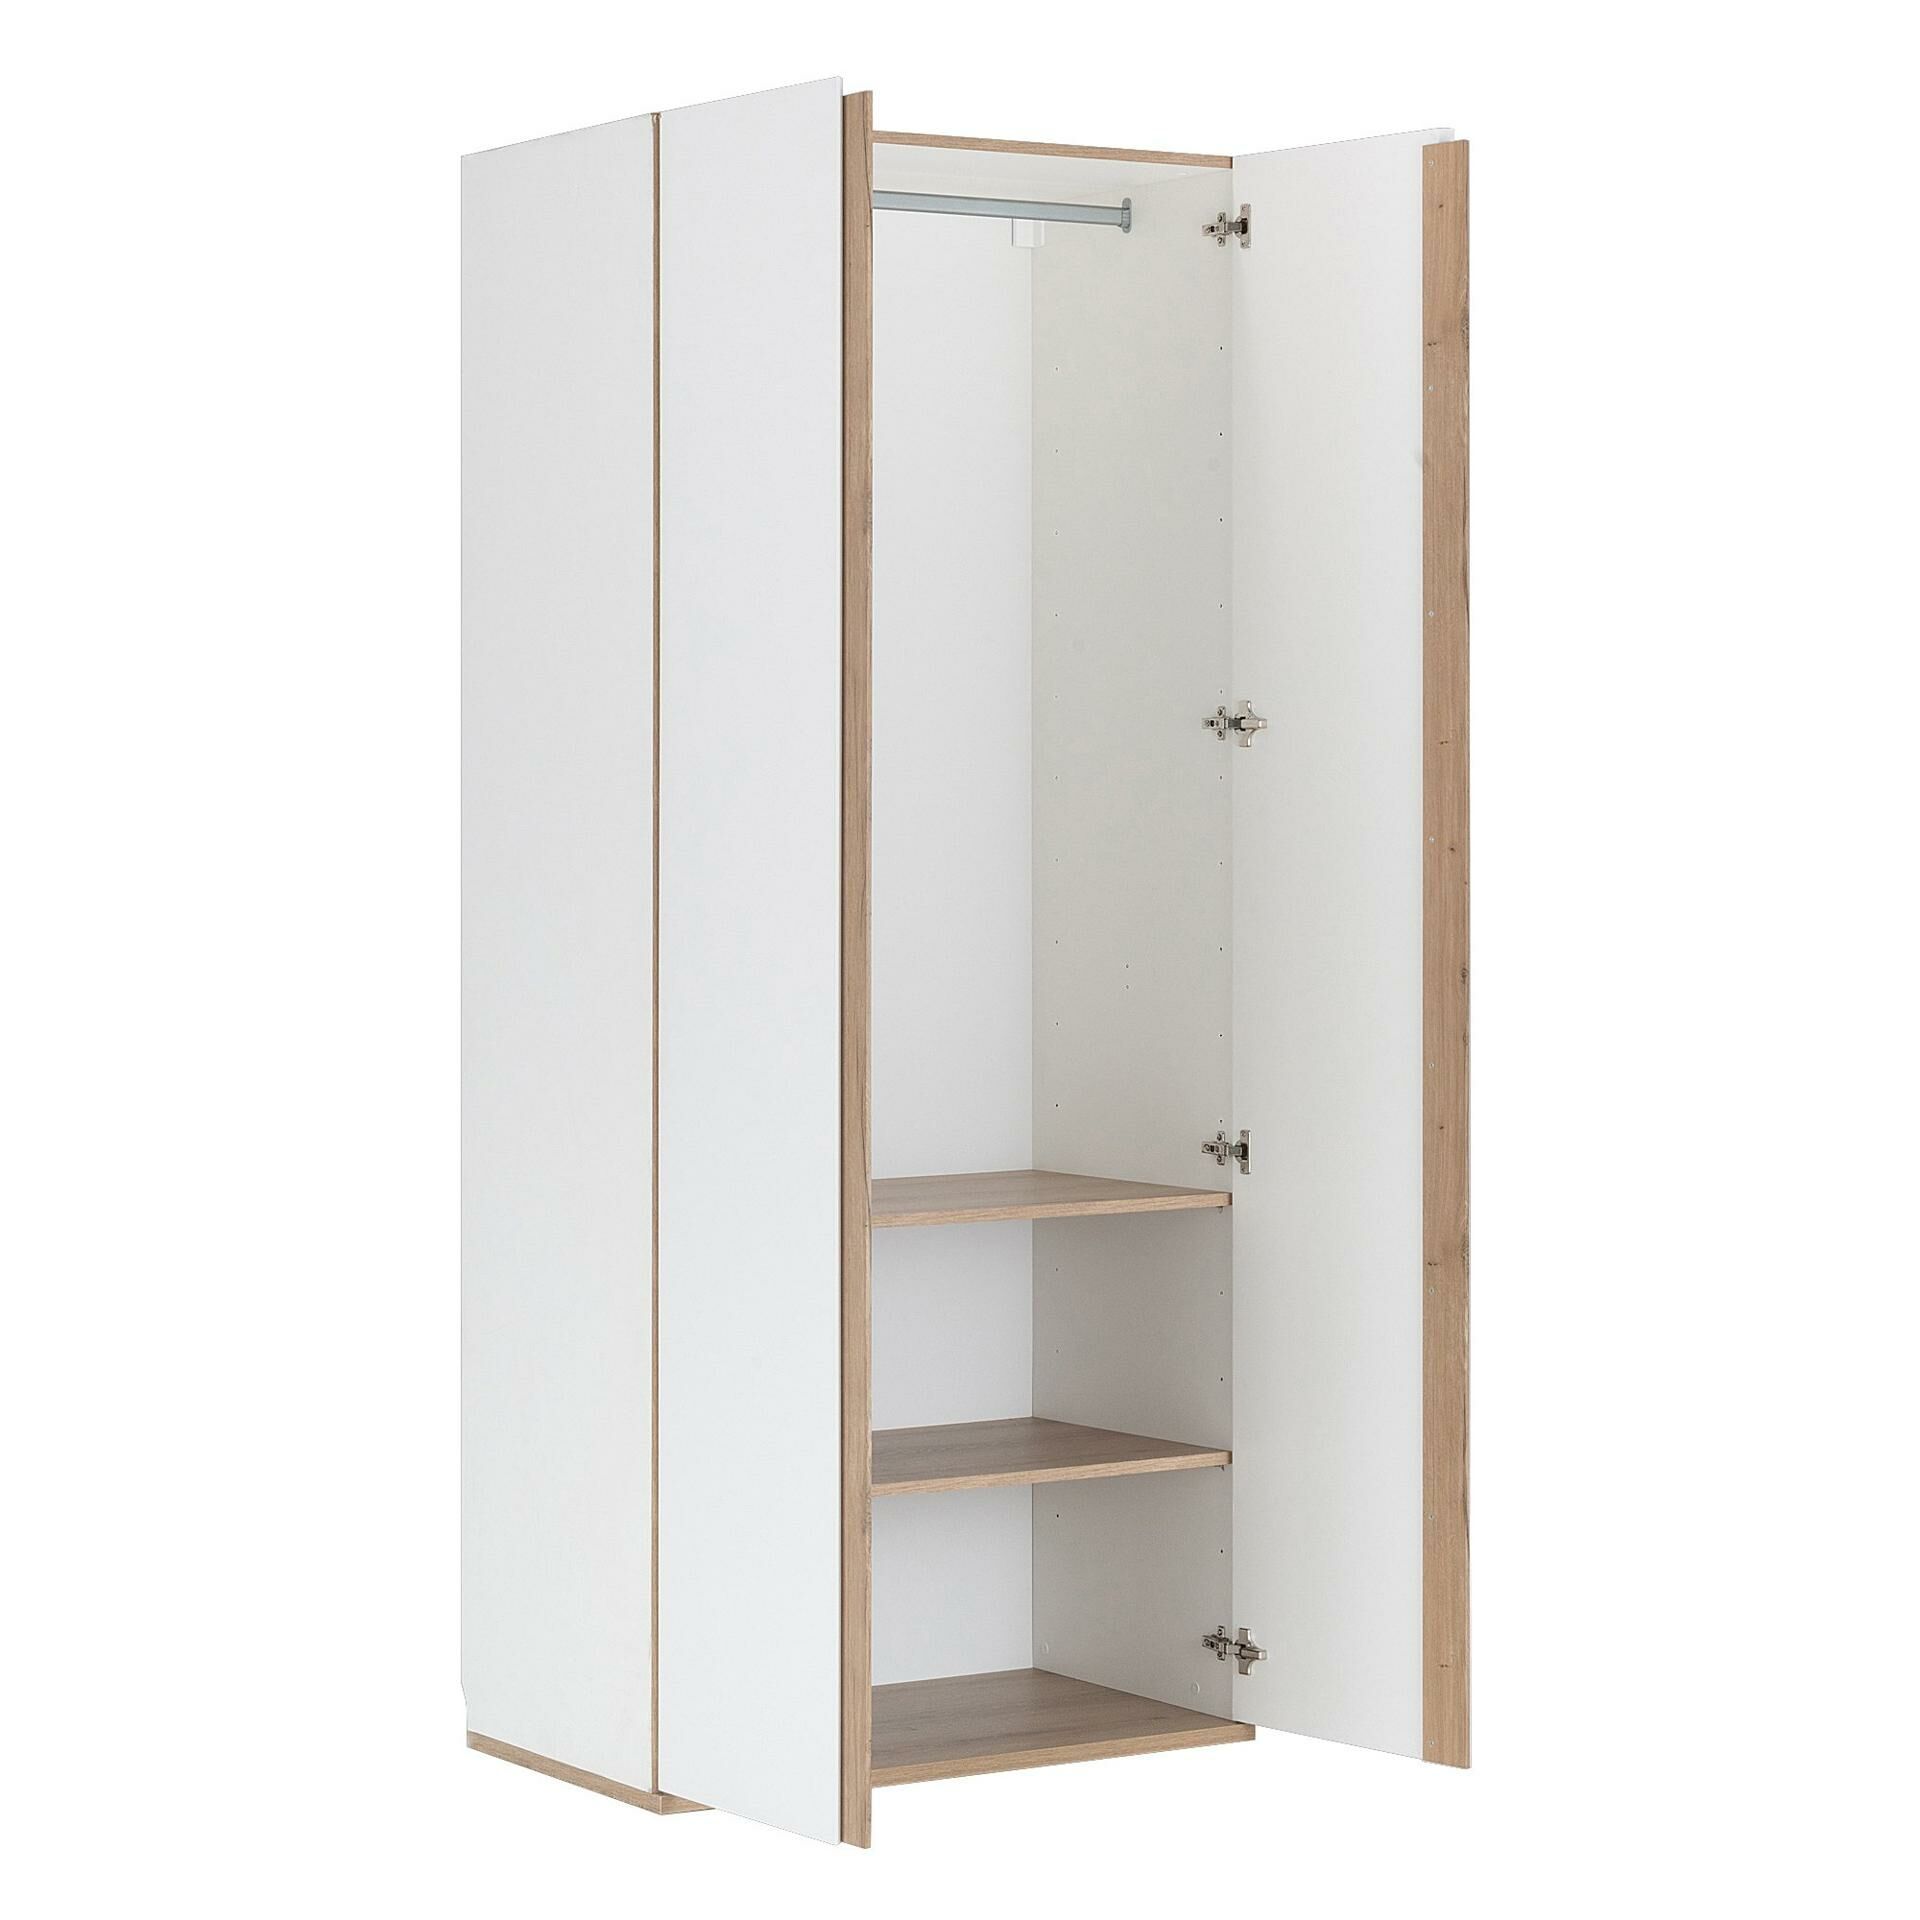 NESTOR - Armoire dressing d'angle avec 1 porte en bois effet chêne - blanc  H235xL96cm